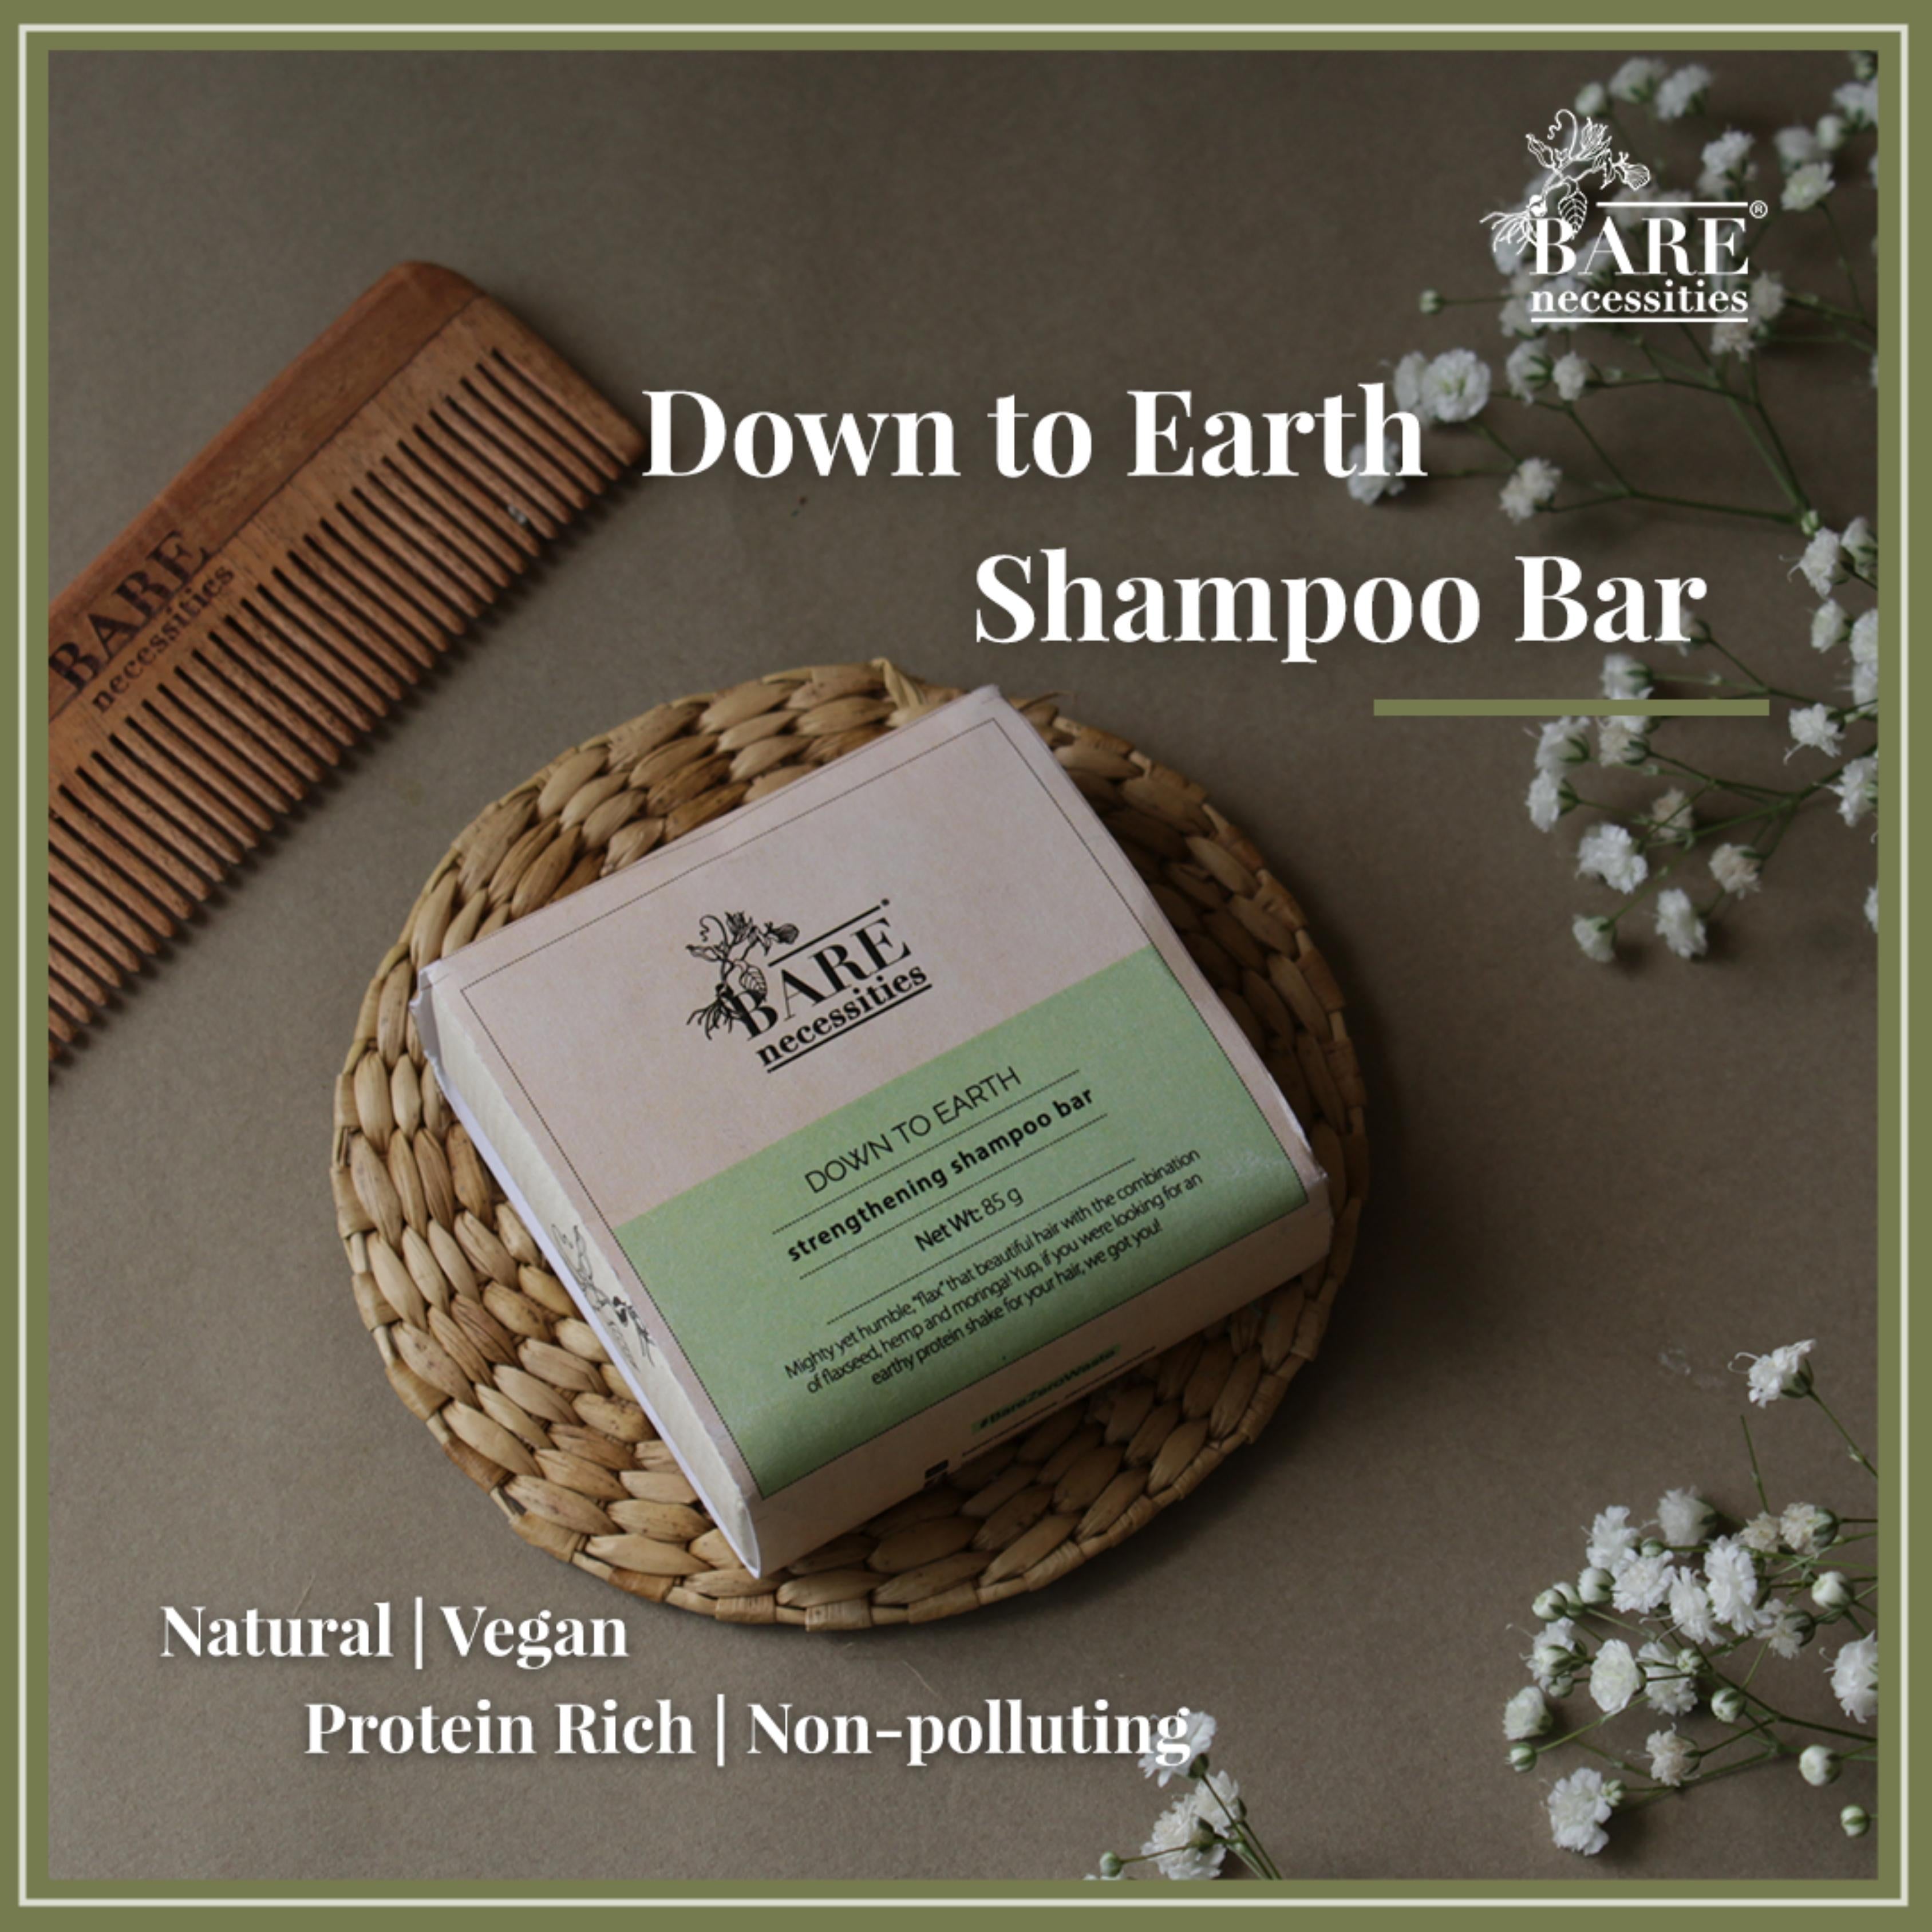 Down to Earth Shampoo Bar (Natural, Vegan)